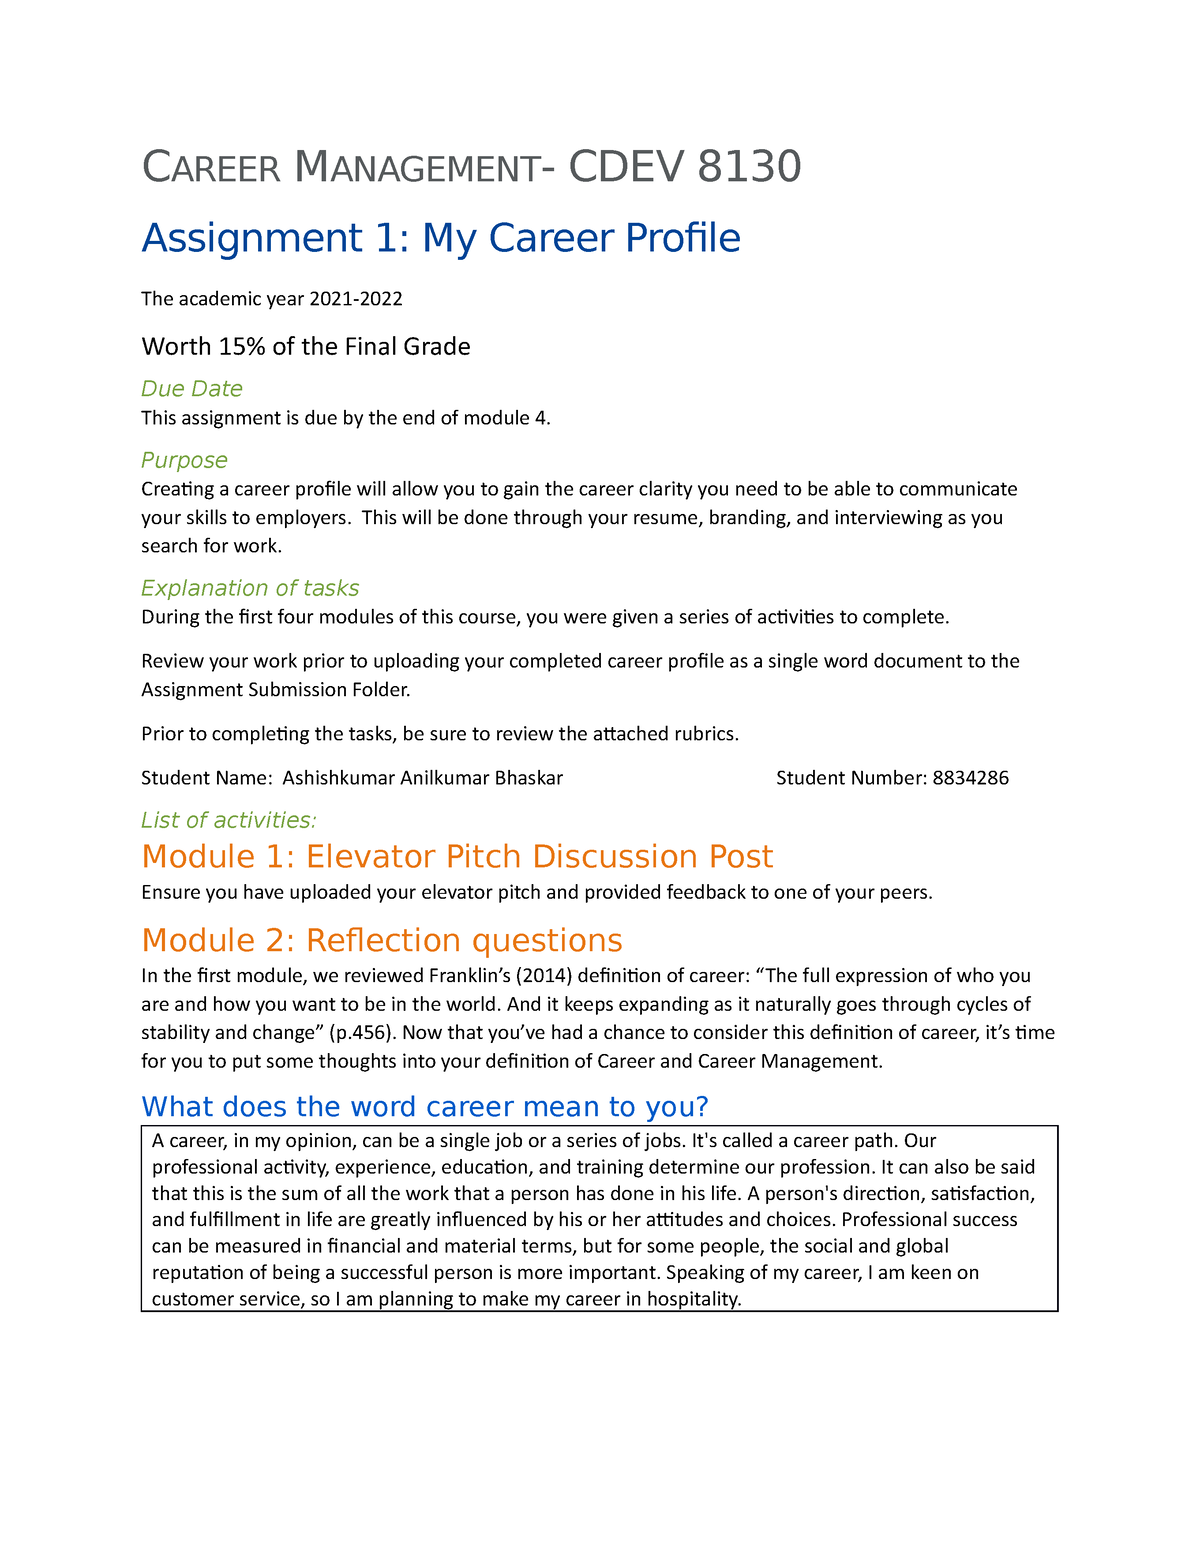 career management assignment 1